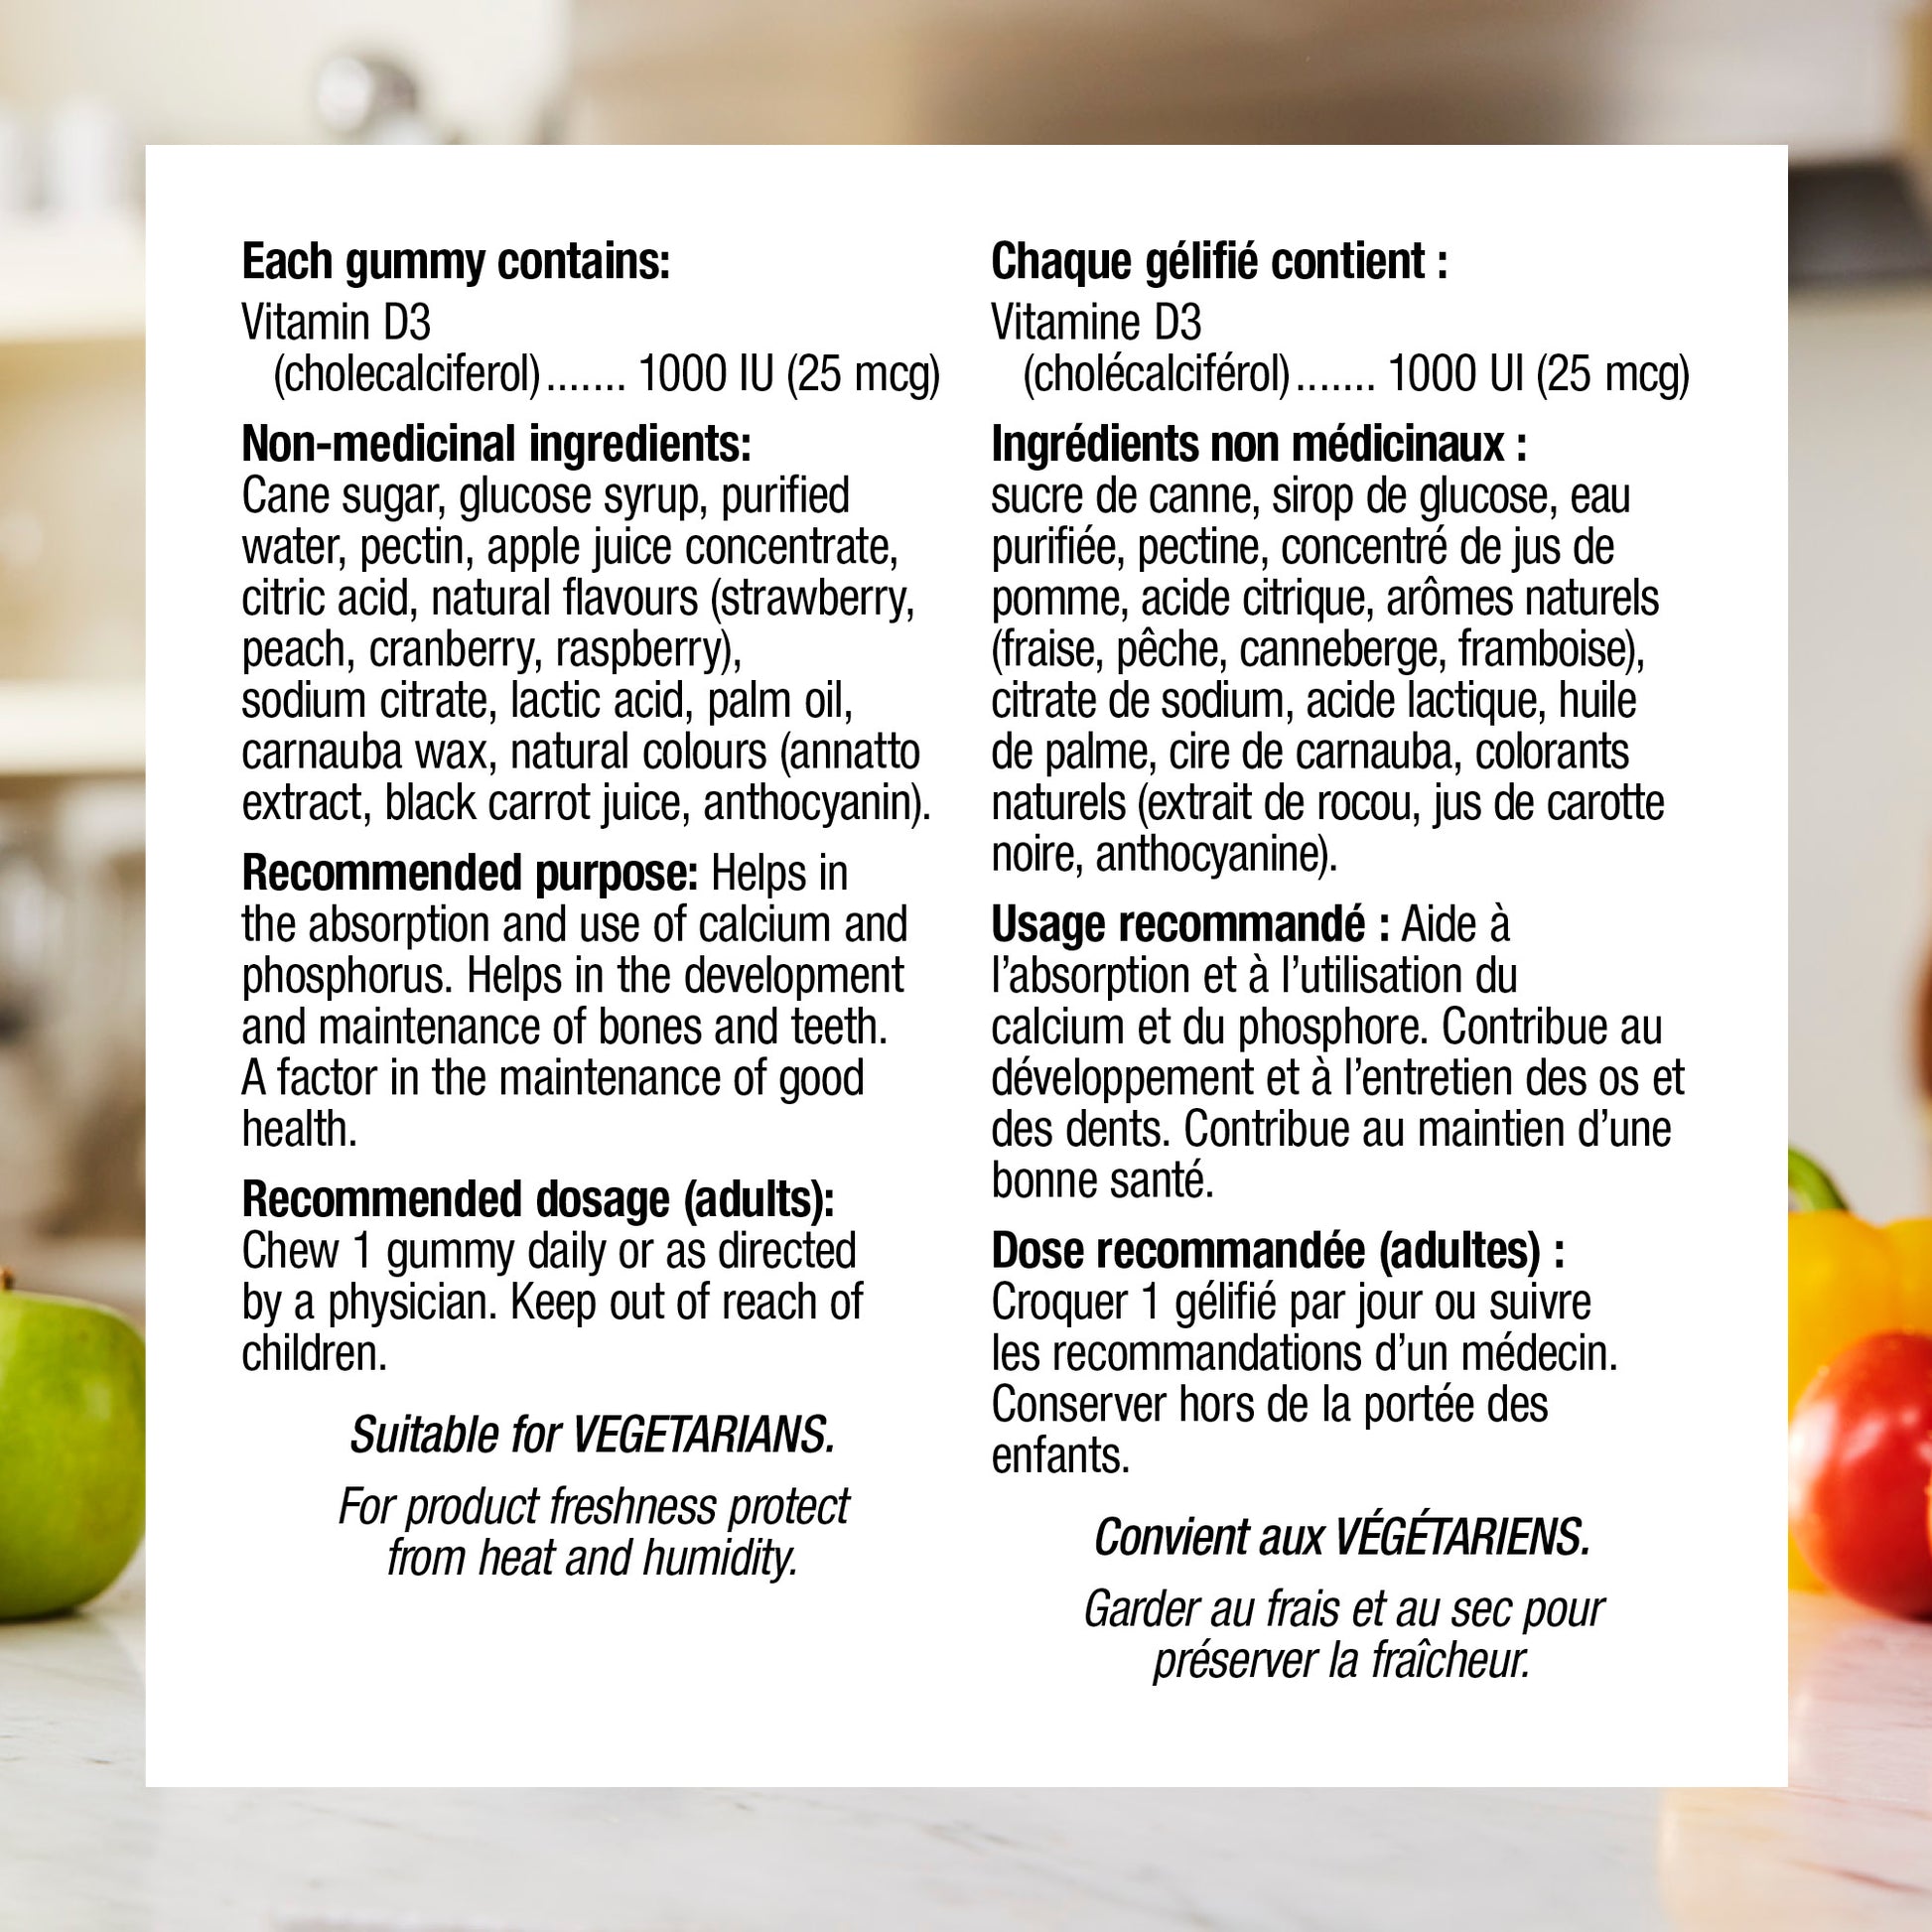 specifications-Vitamine D3  1 000 UI mélange de petits fruits · pêche for Webber Naturals